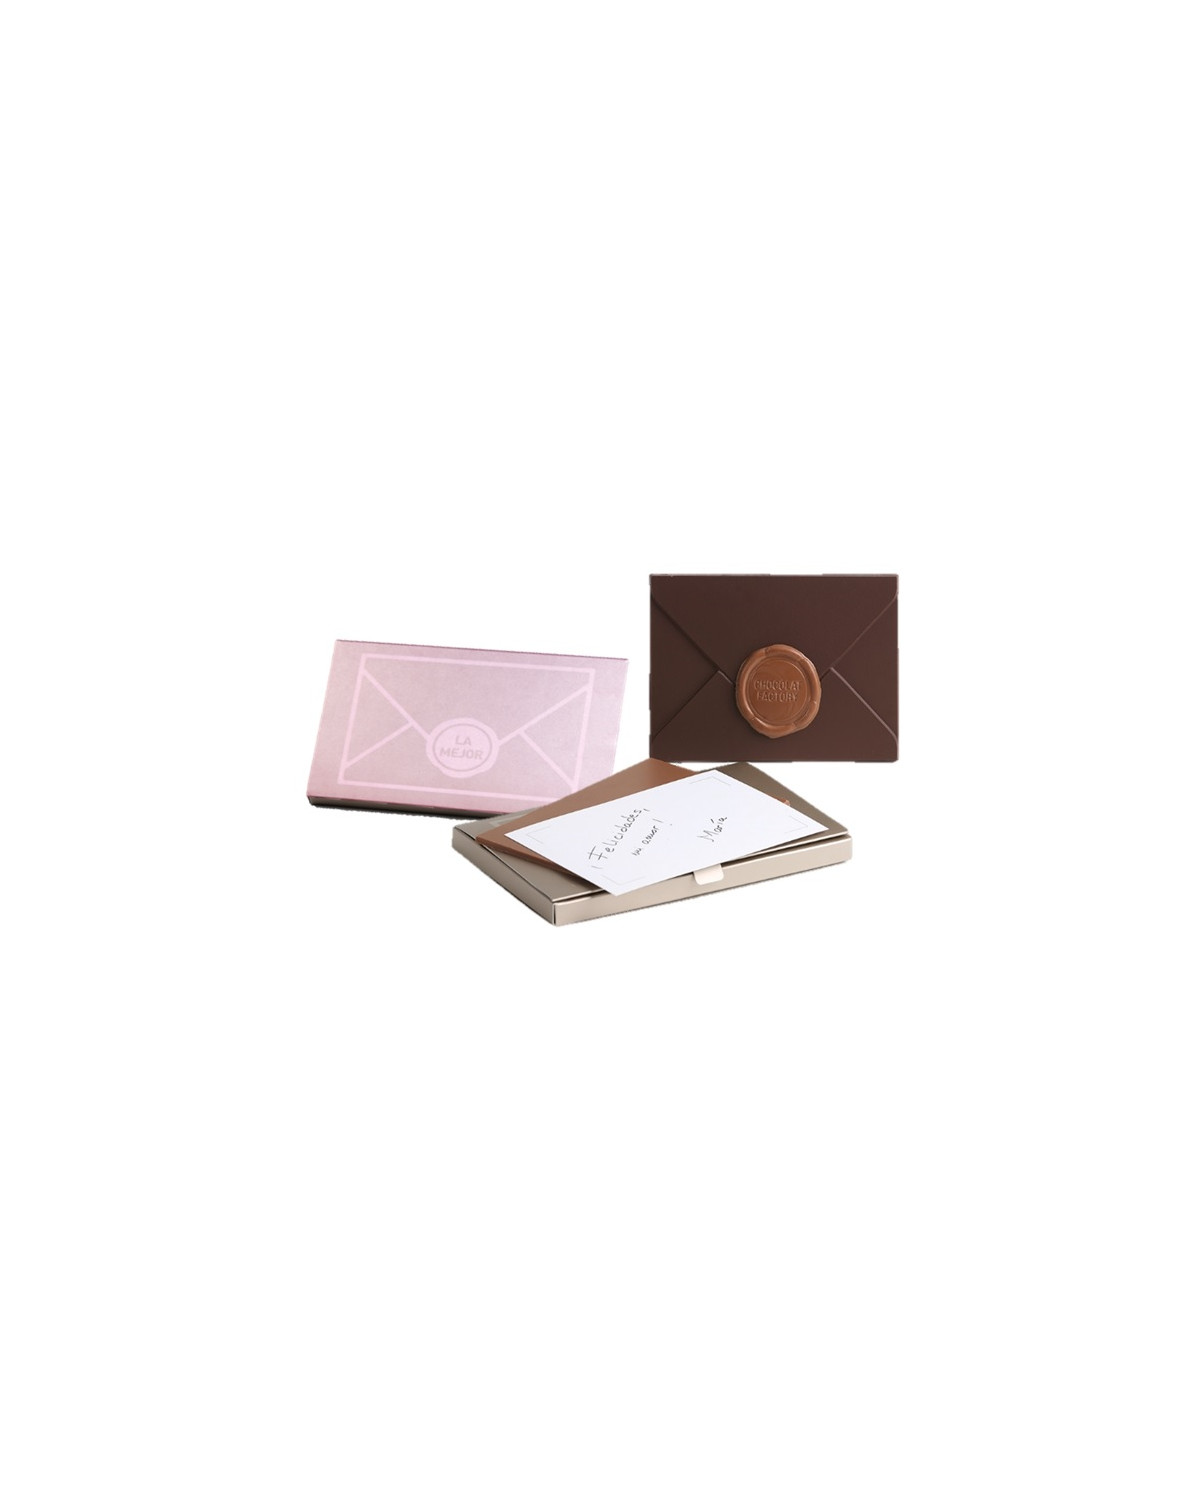 The envelope: sobre de chocolate